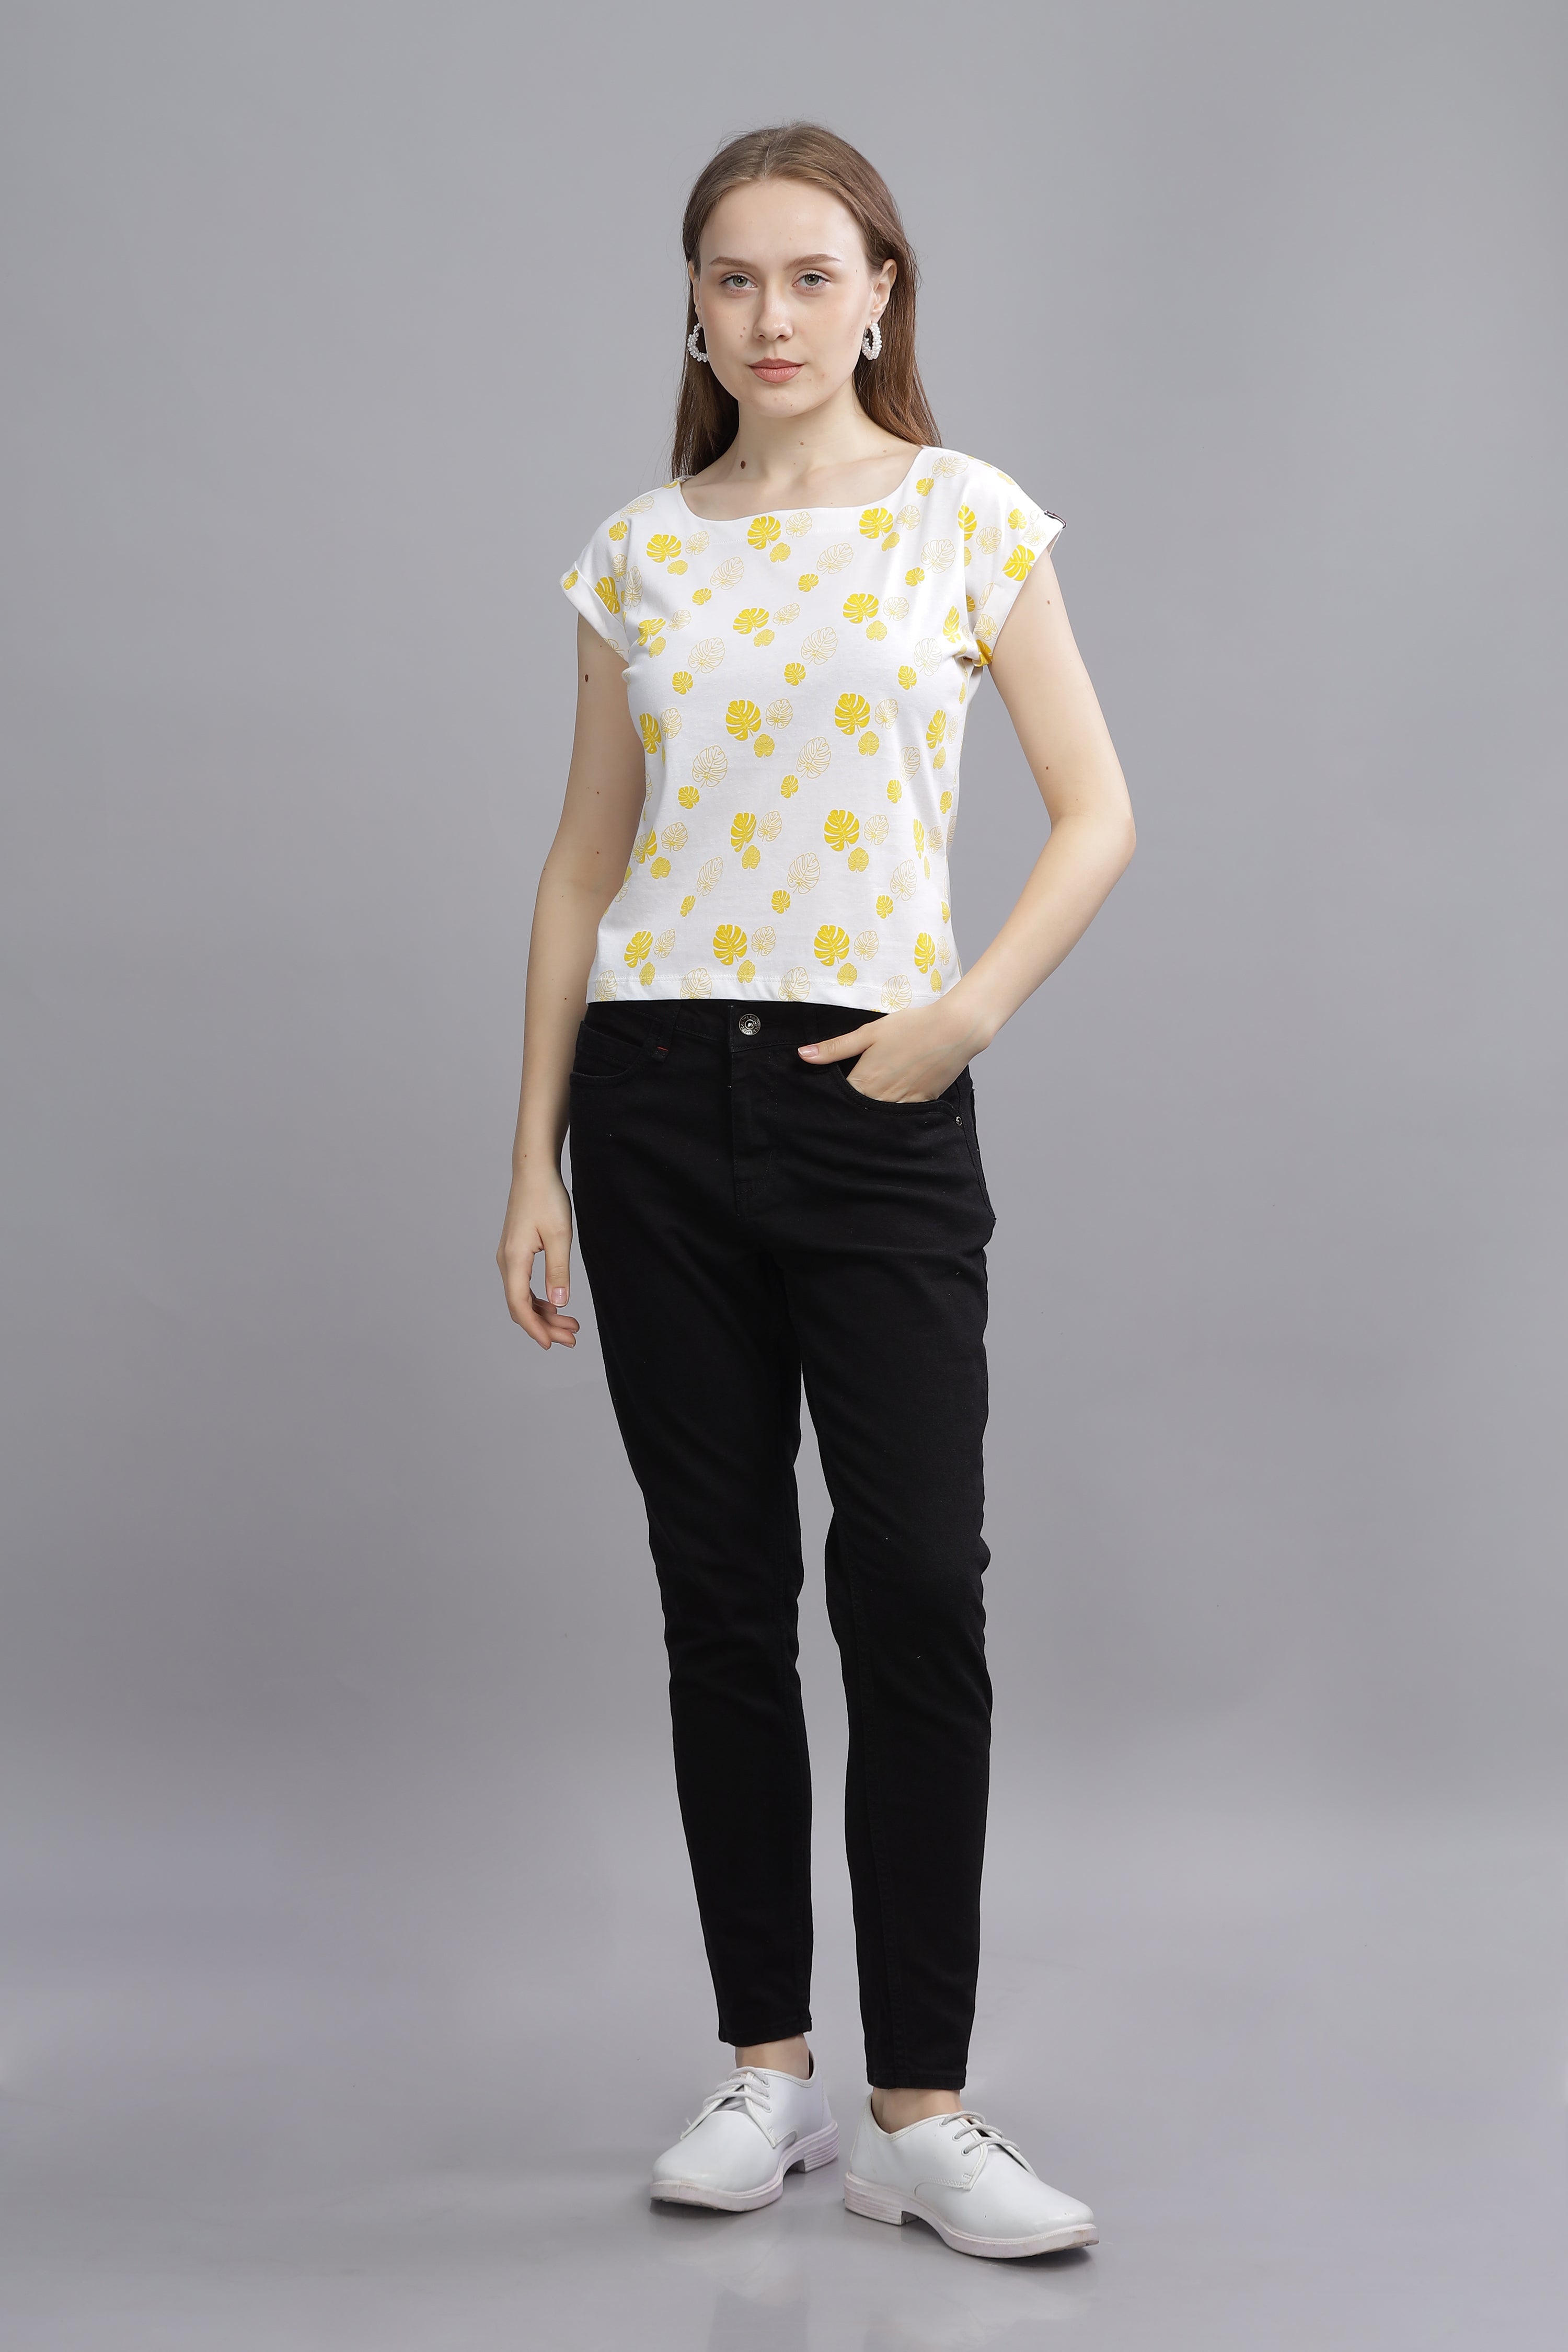 Women's Yellow Flower Patterned Top